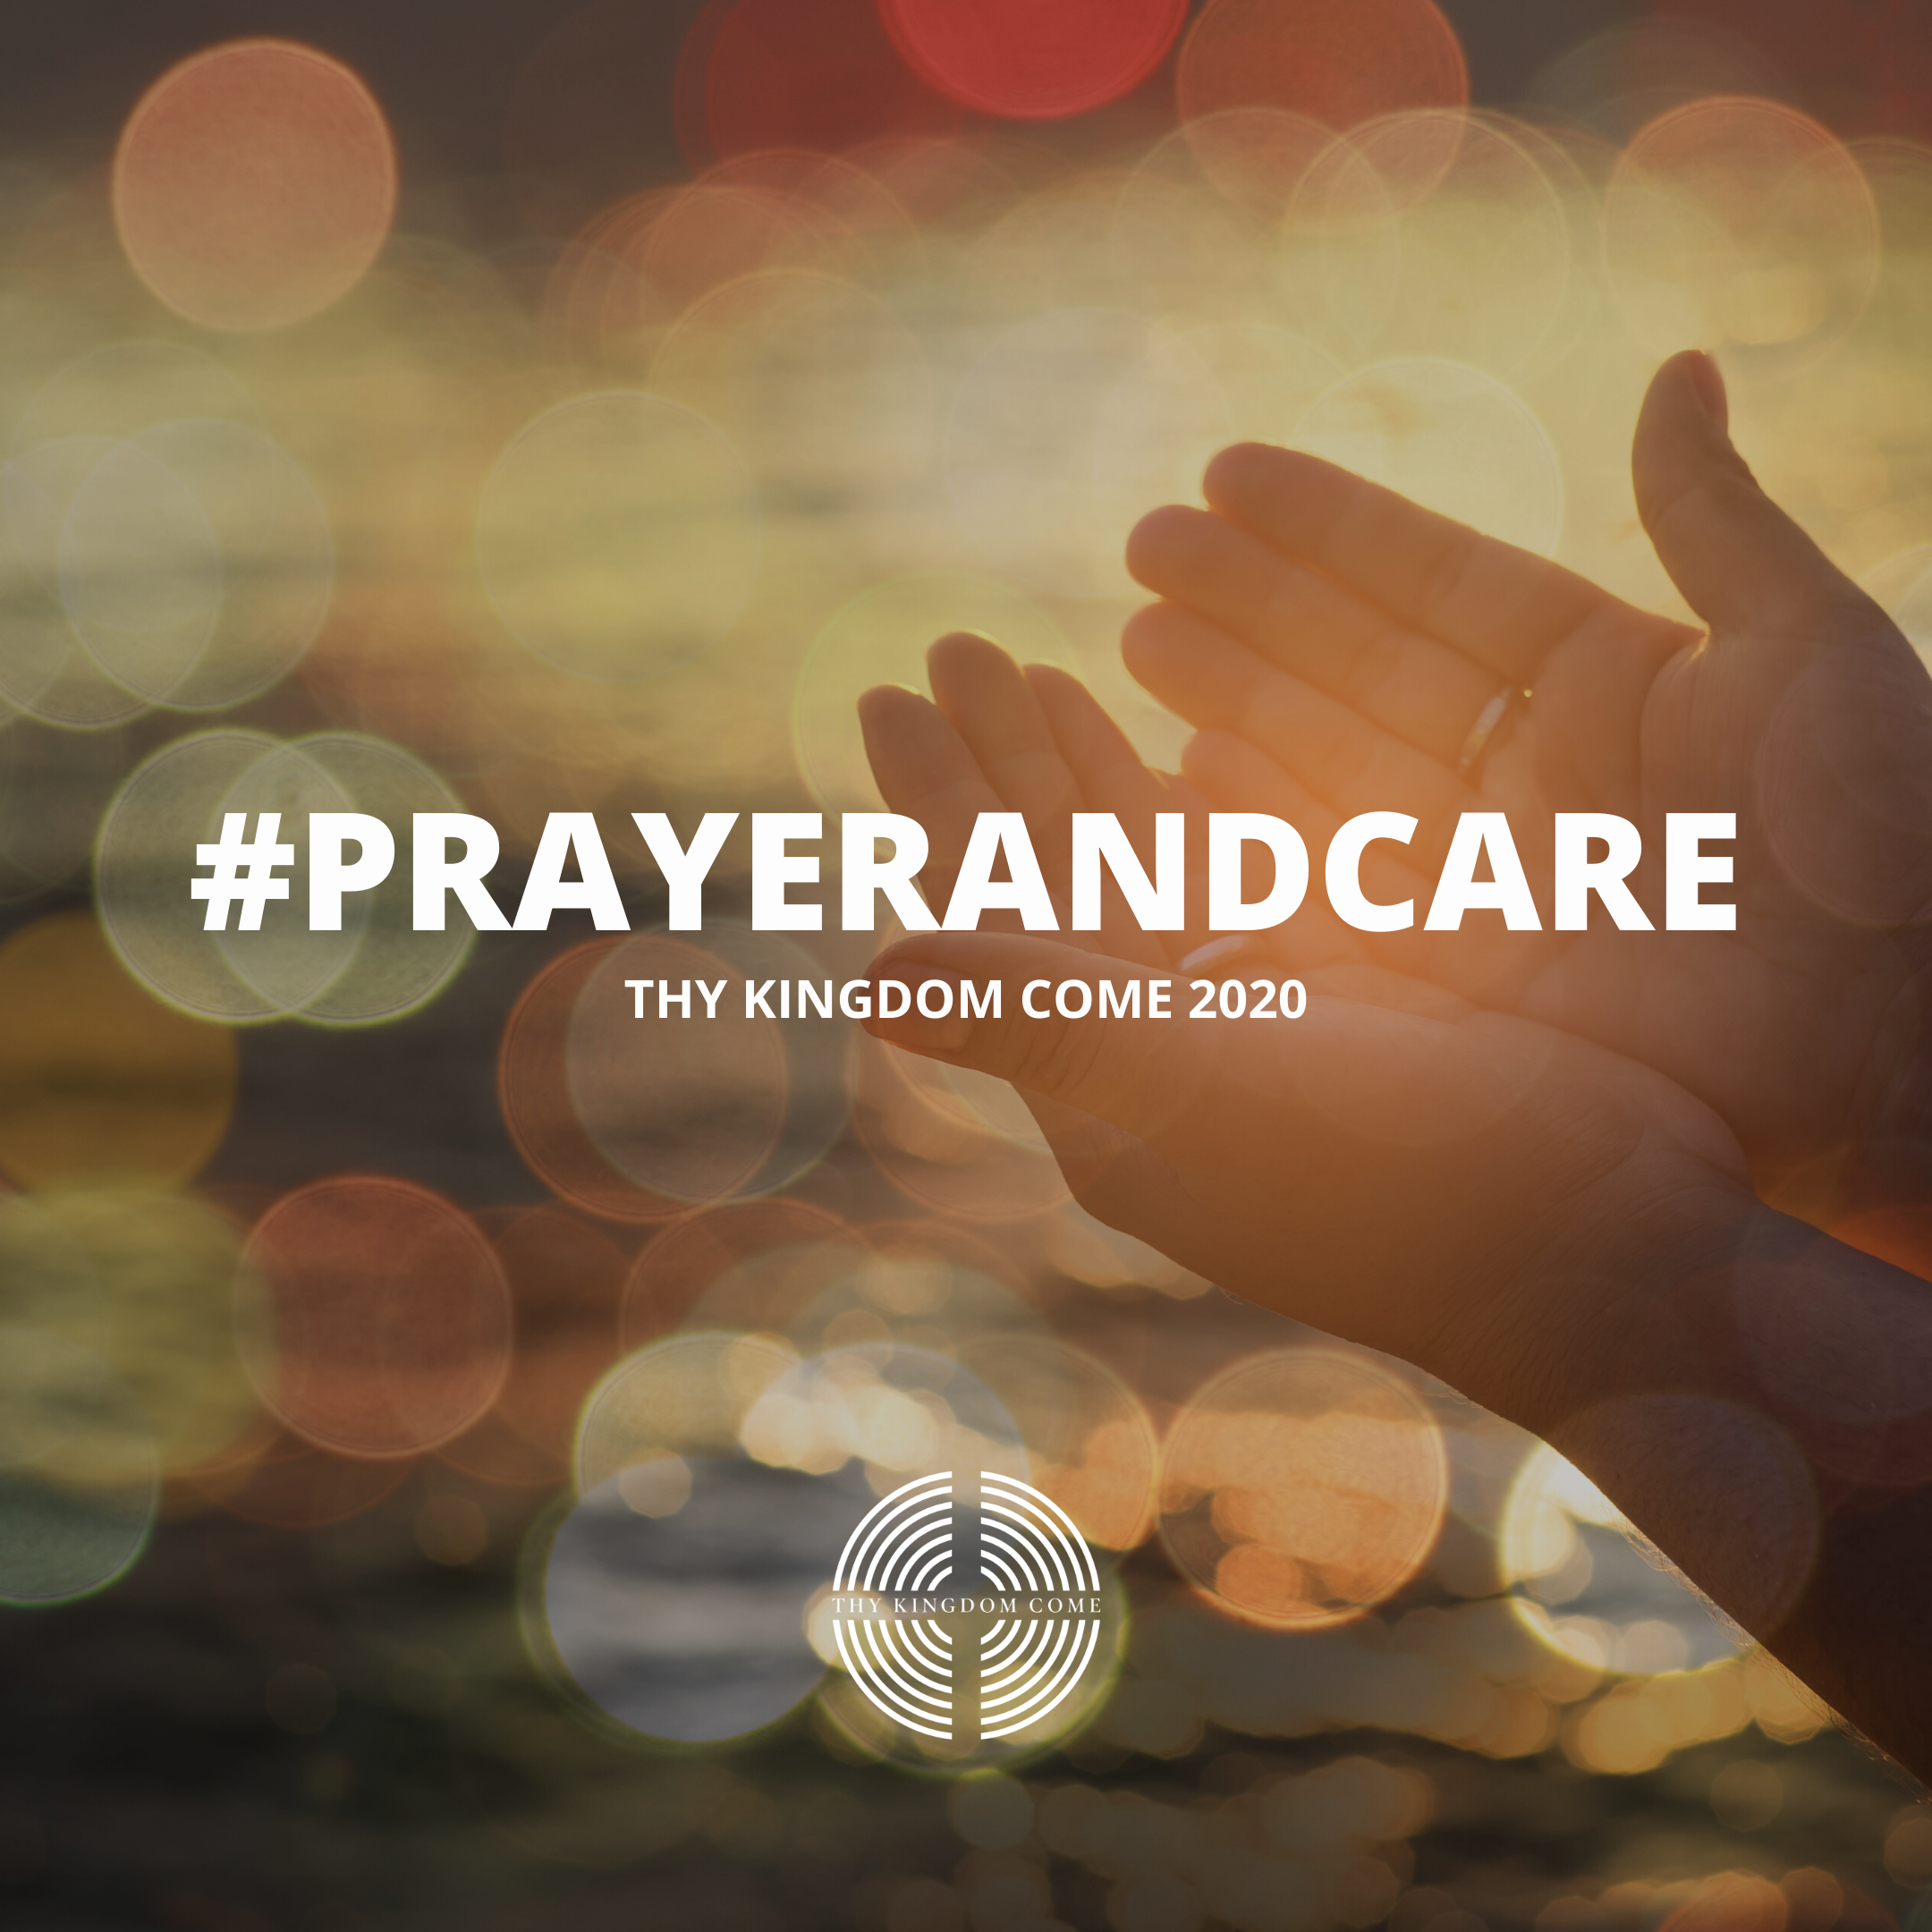 Prayer and care